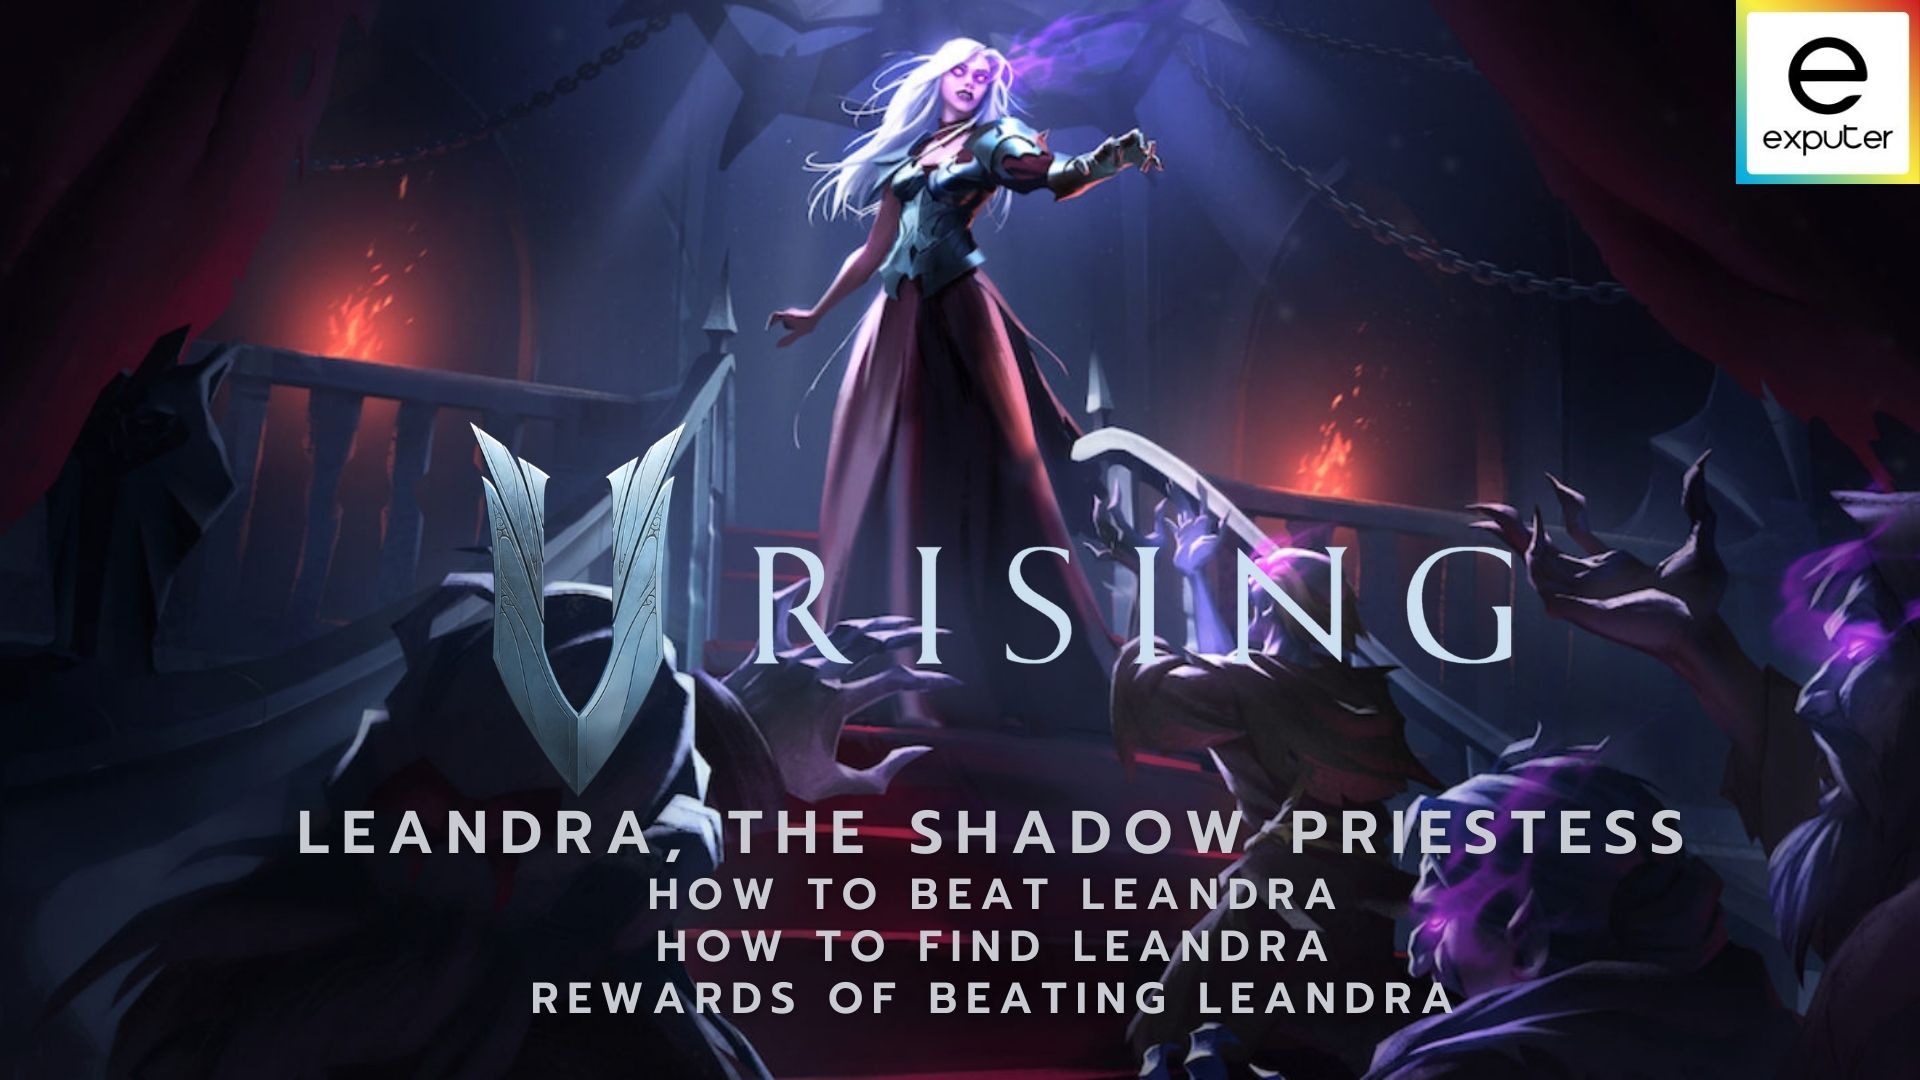 Leandra, the Shadow Priestess